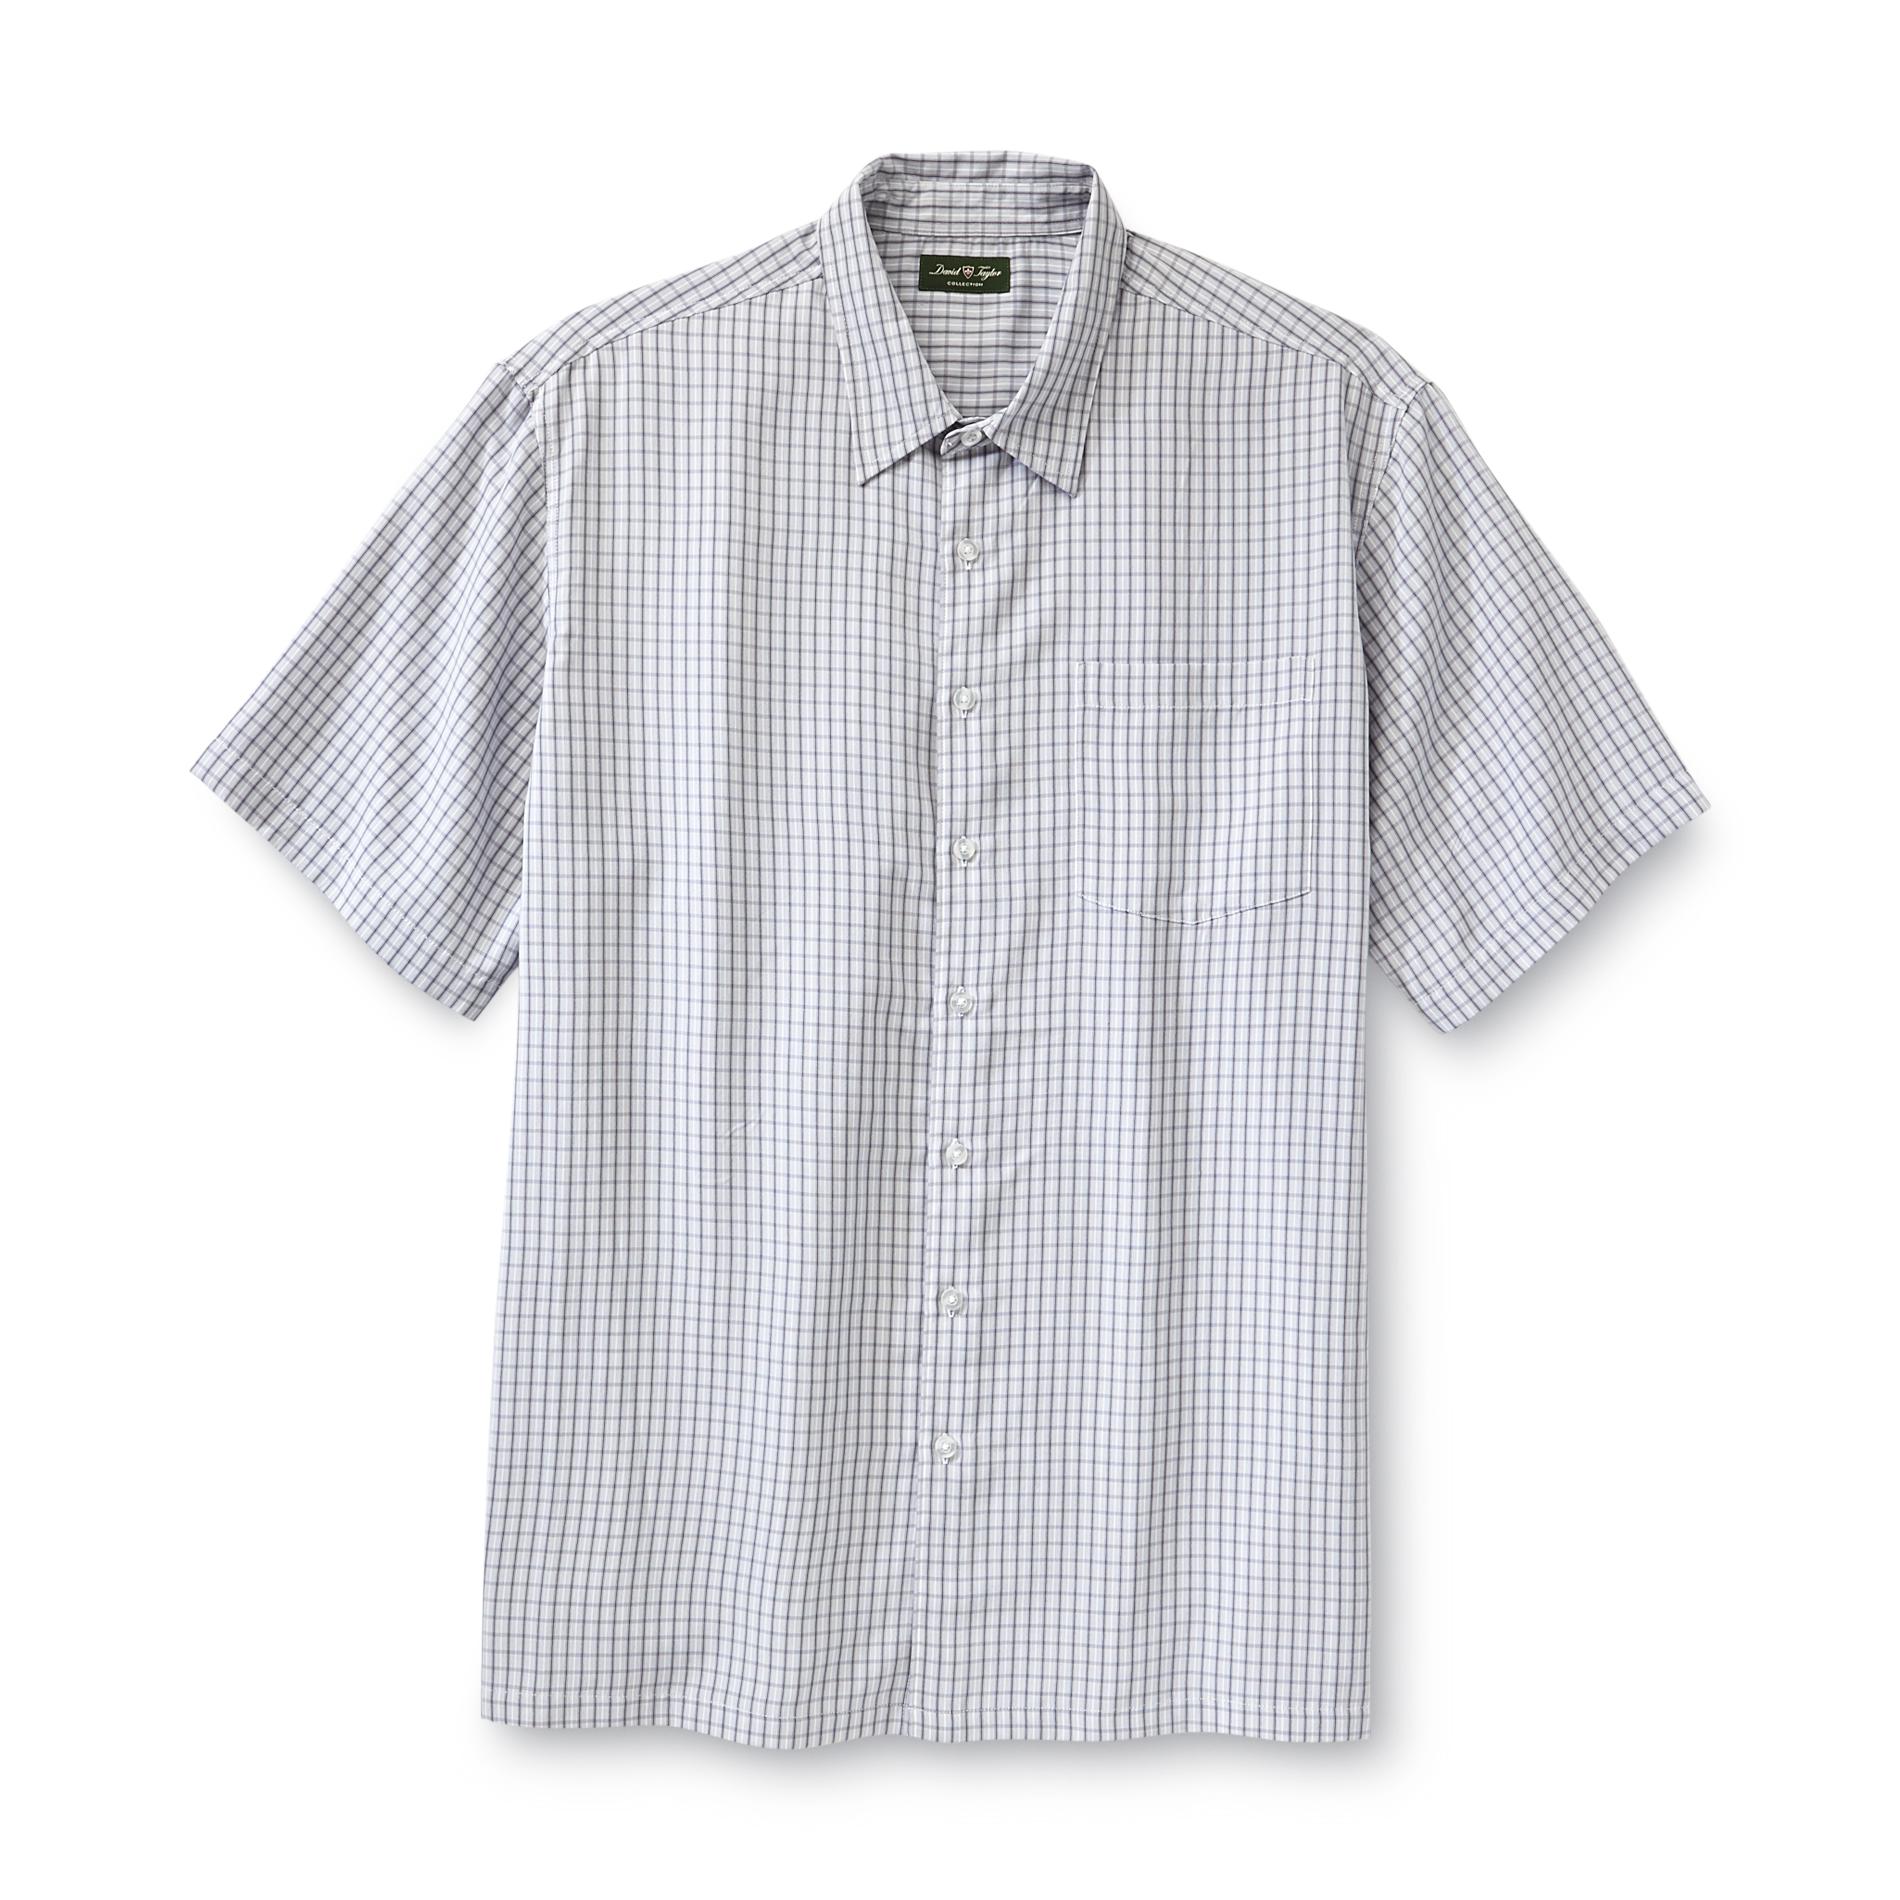 David Taylor Collection Men's Big & Tall Microfiber Dress Shirt - Checkered